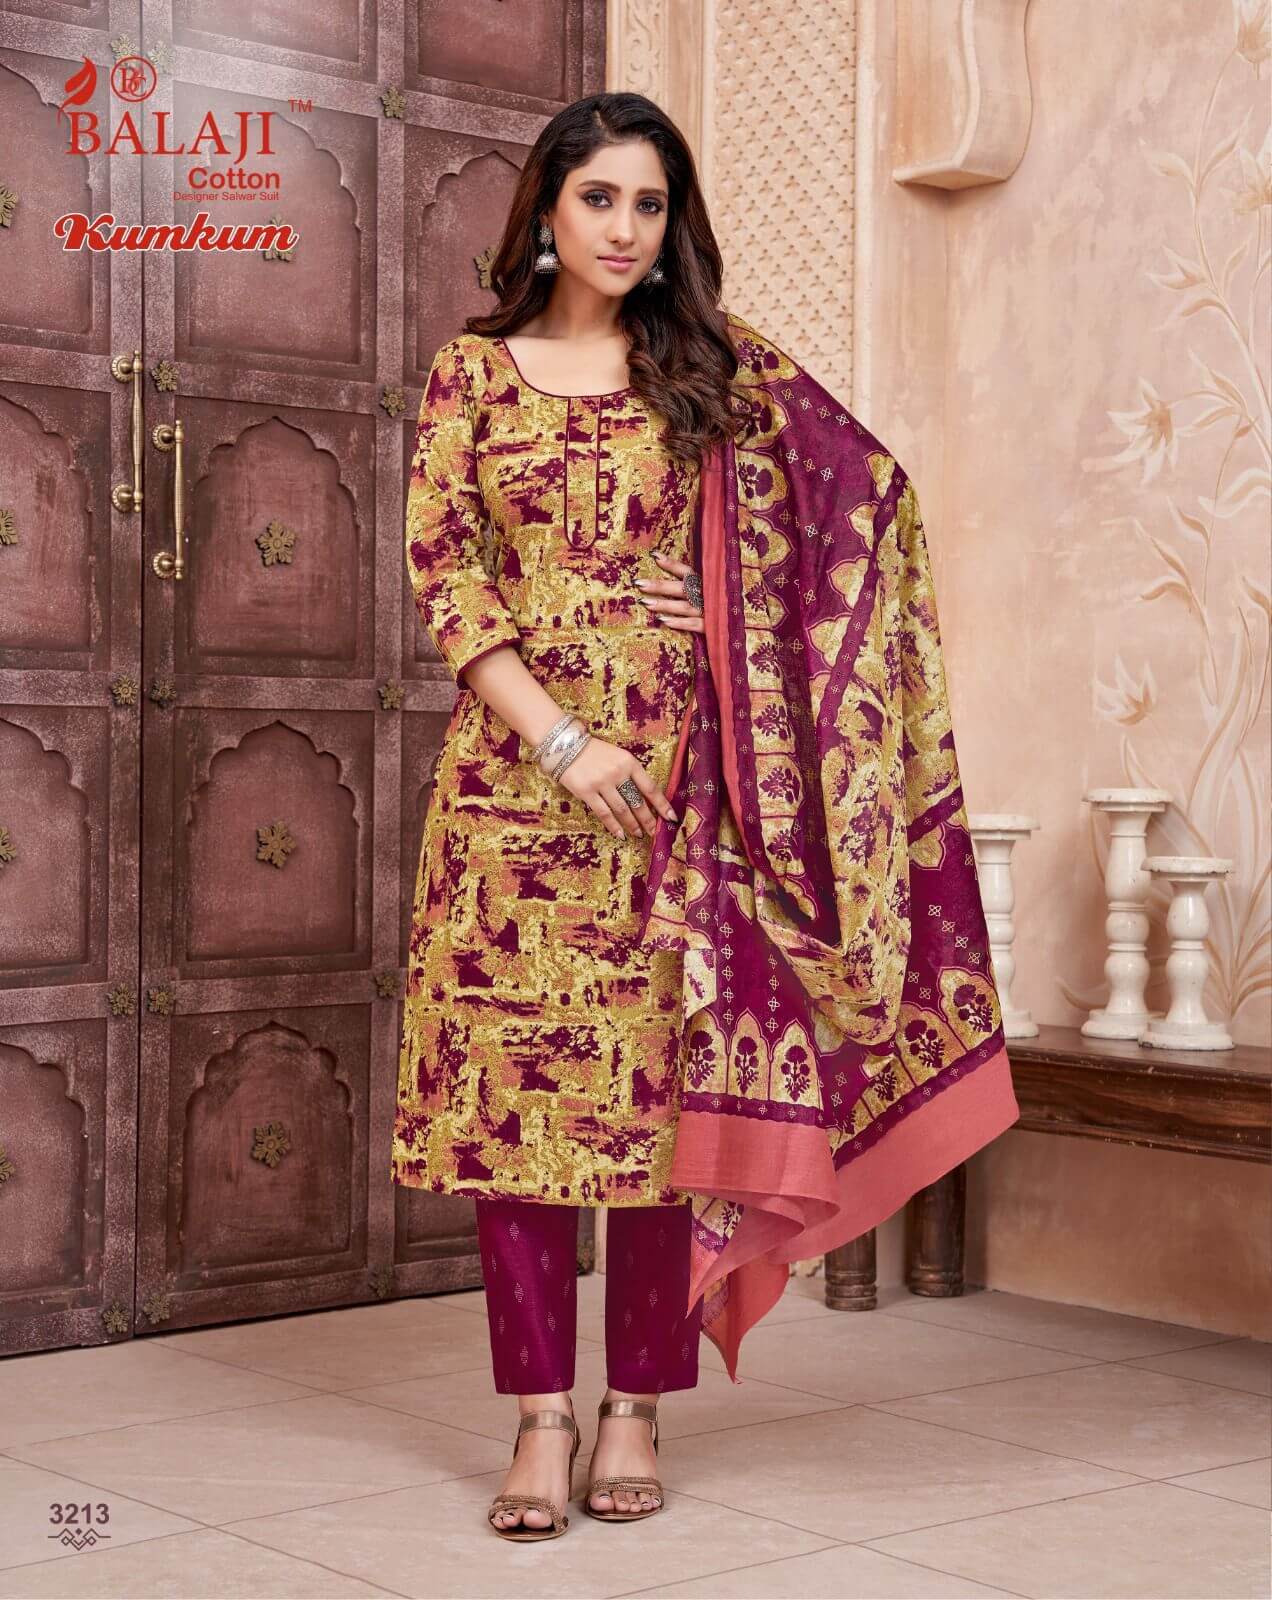 Balaji Cotton Kumkum Vol 32 Readymade Dress Catalog collection 13